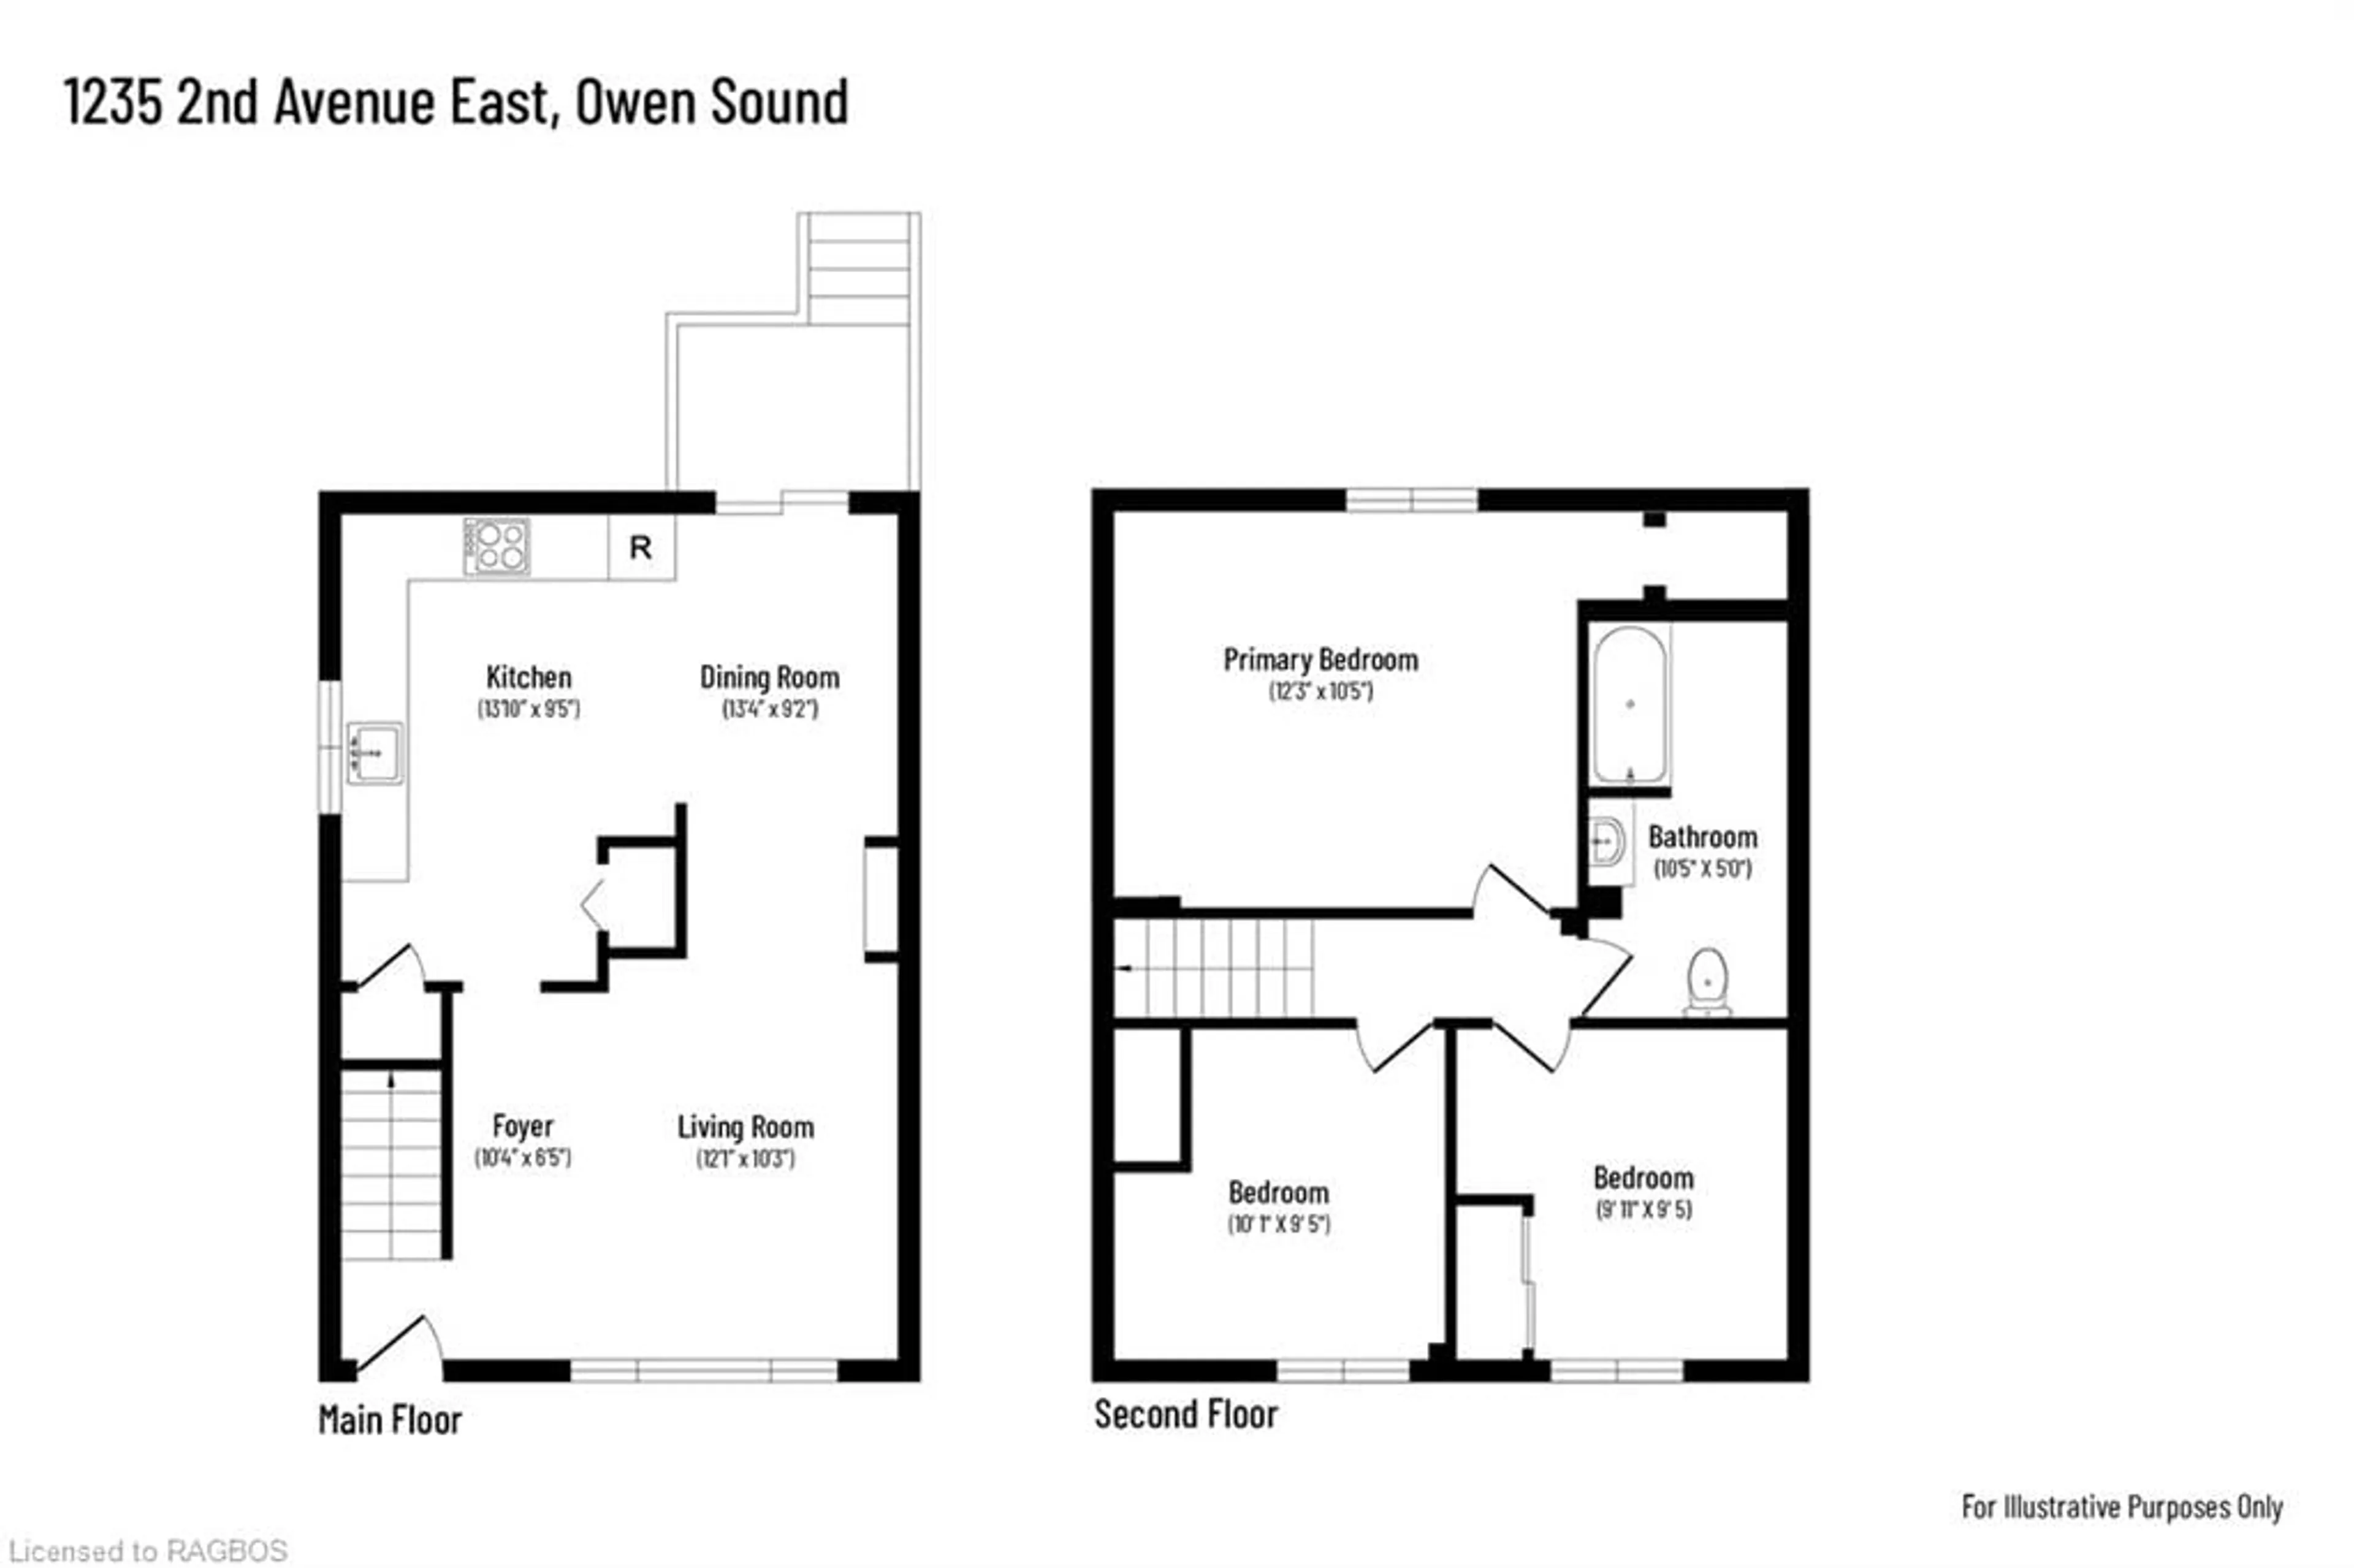 Floor plan for 1235 2nd Ave, Owen Sound Ontario N4K 2J2